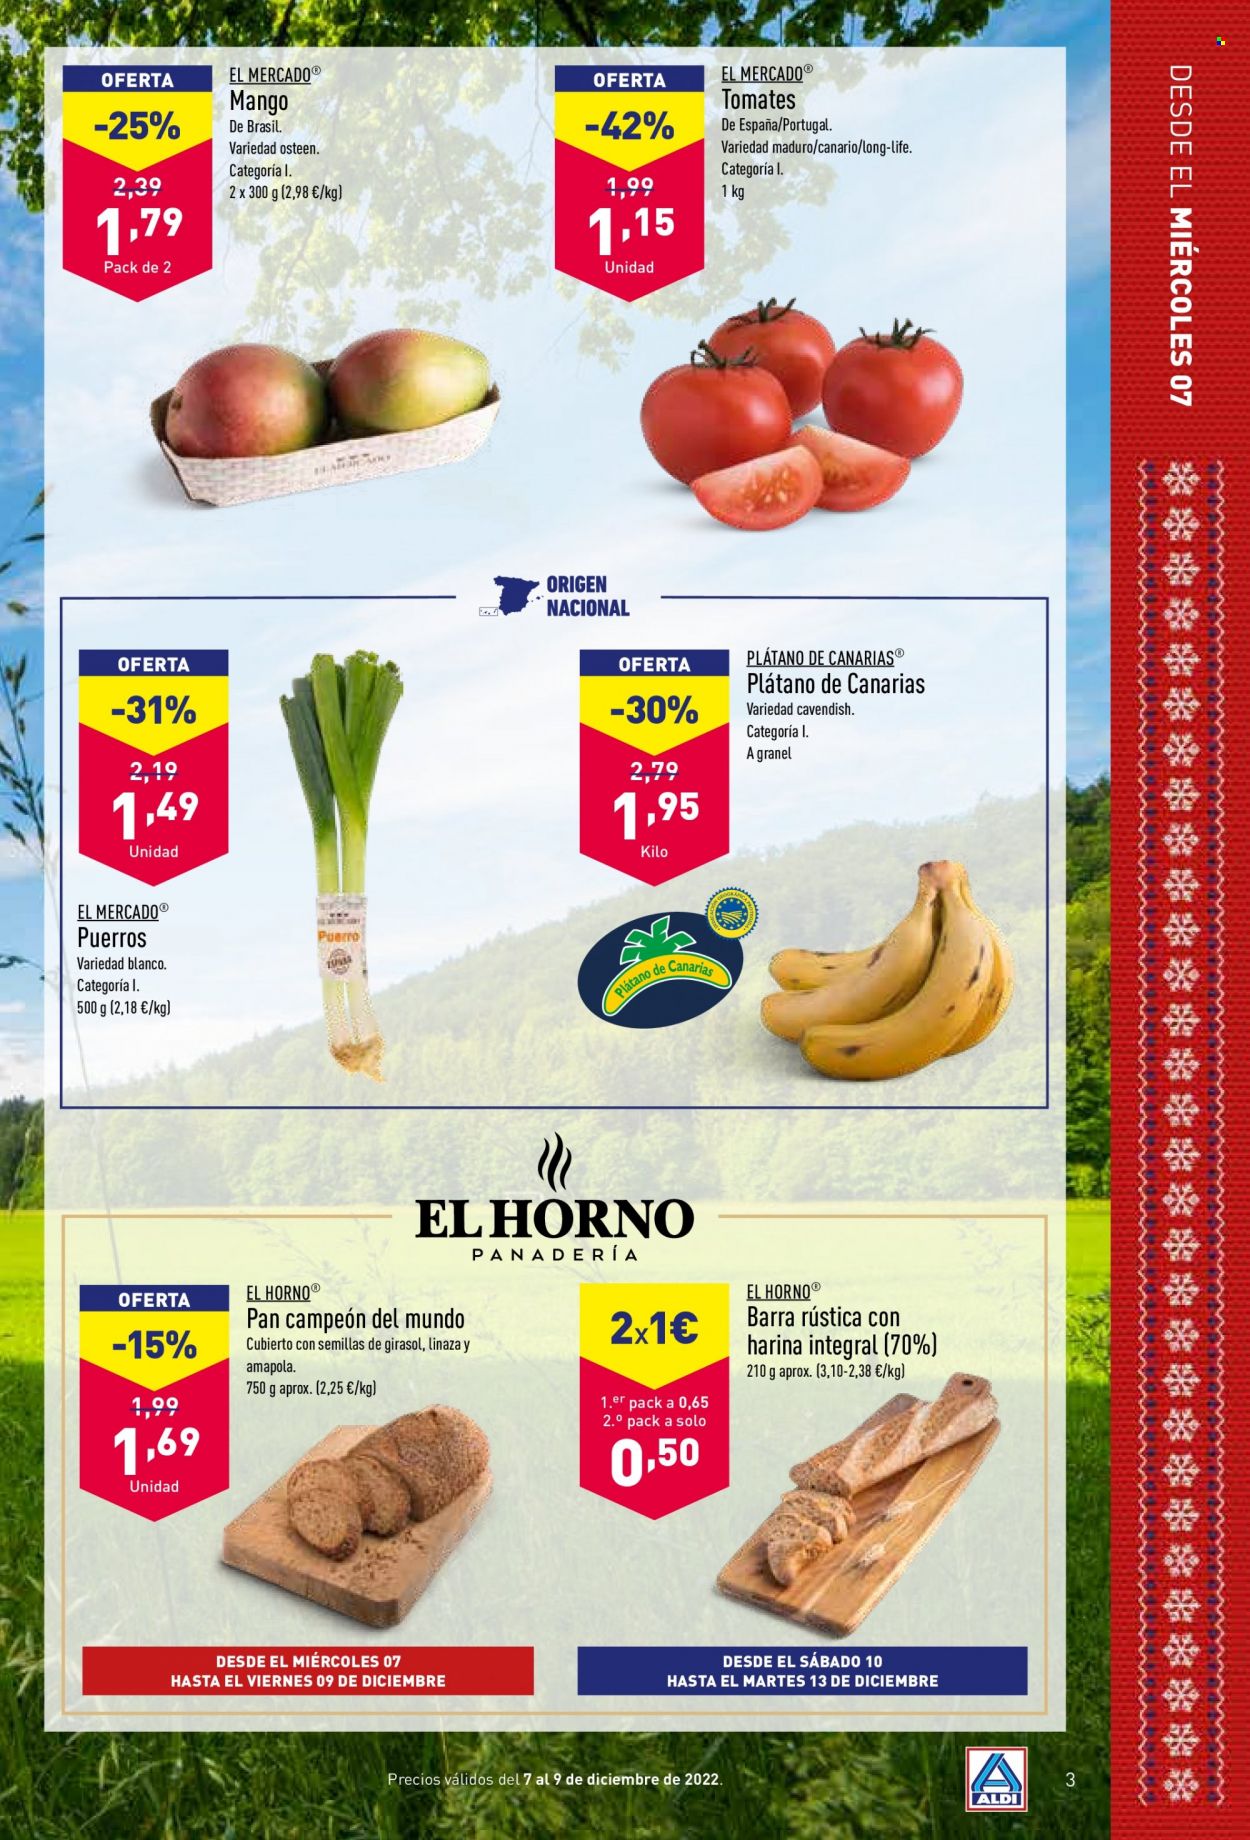 thumbnail - Folleto actual Aldi - 07/12/22 - 13/12/22 - Ventas - mango, tomate, puerro, banana, plátano, pan, baguette, barra de pan. Página 3.